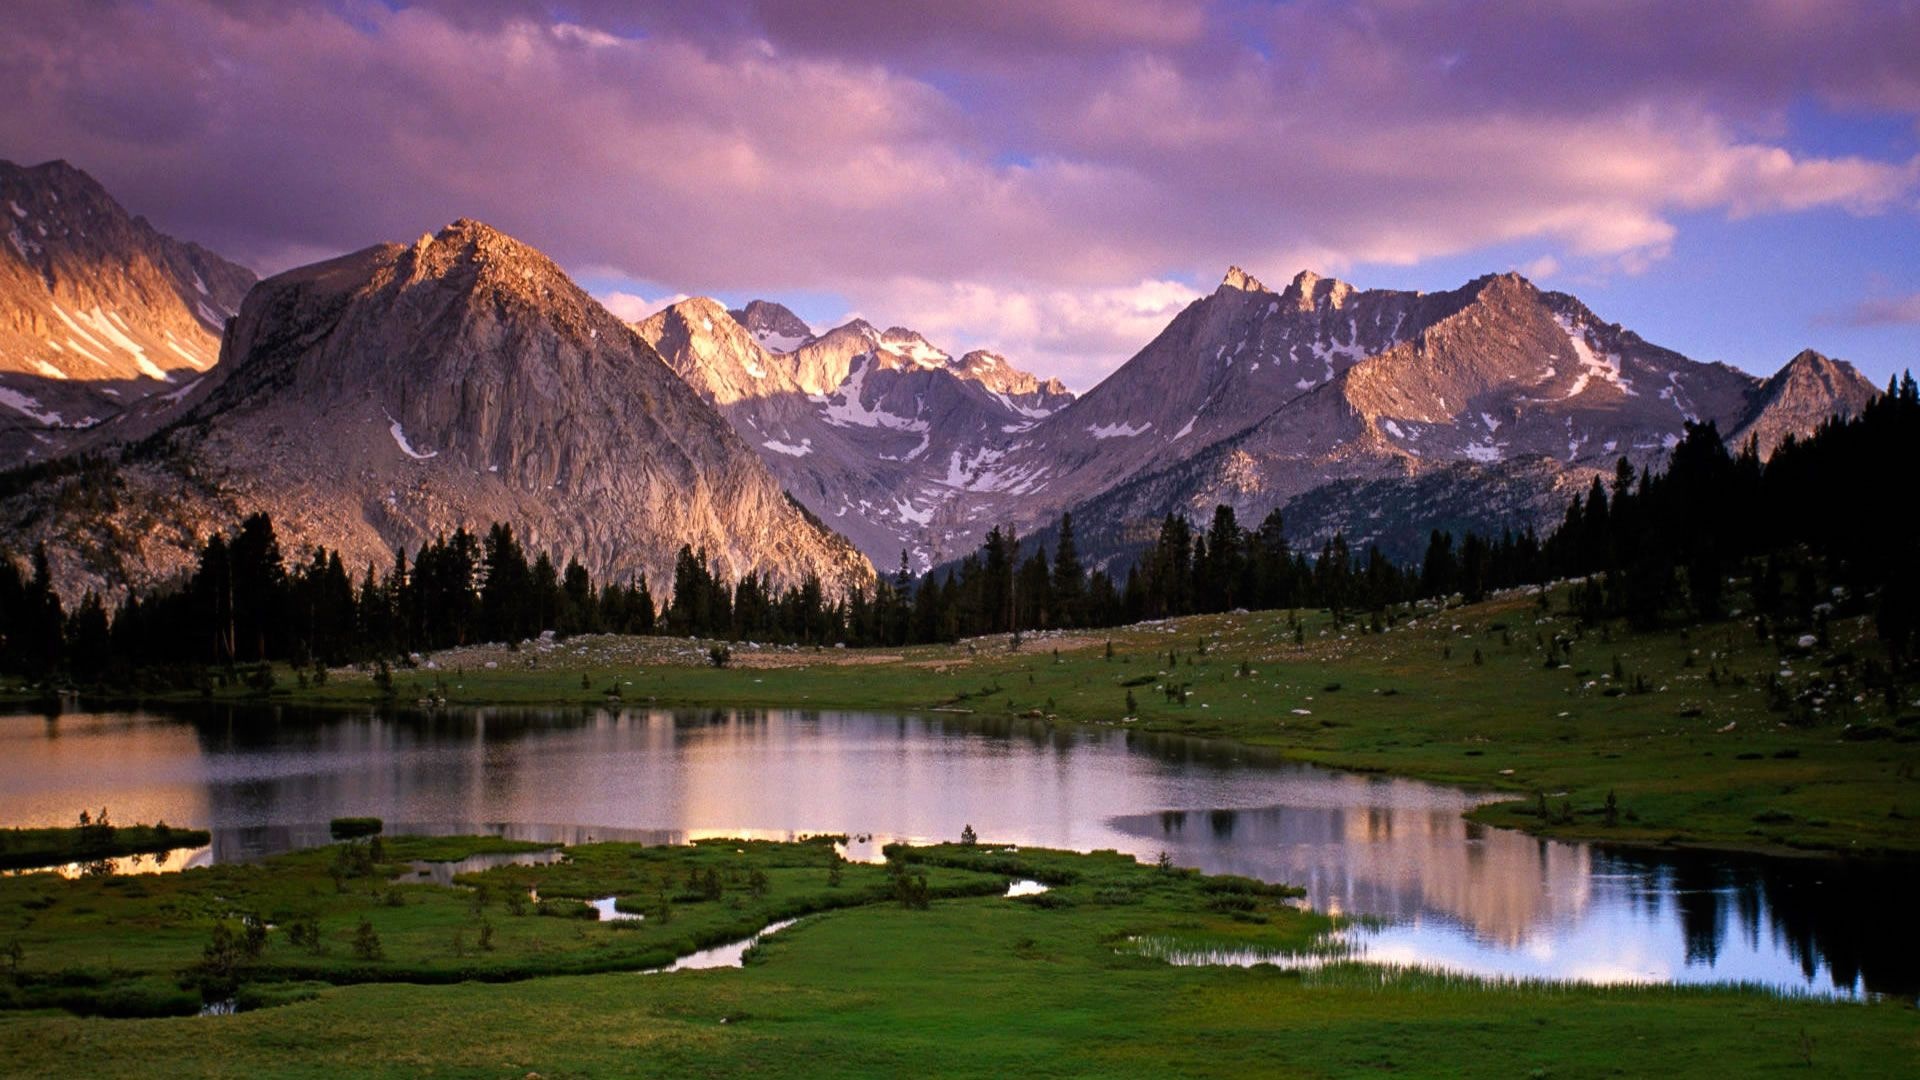 Altai Mountains, Mountain sceneries, Desktop wallpapers, Nature's allure, 1920x1080 Full HD Desktop